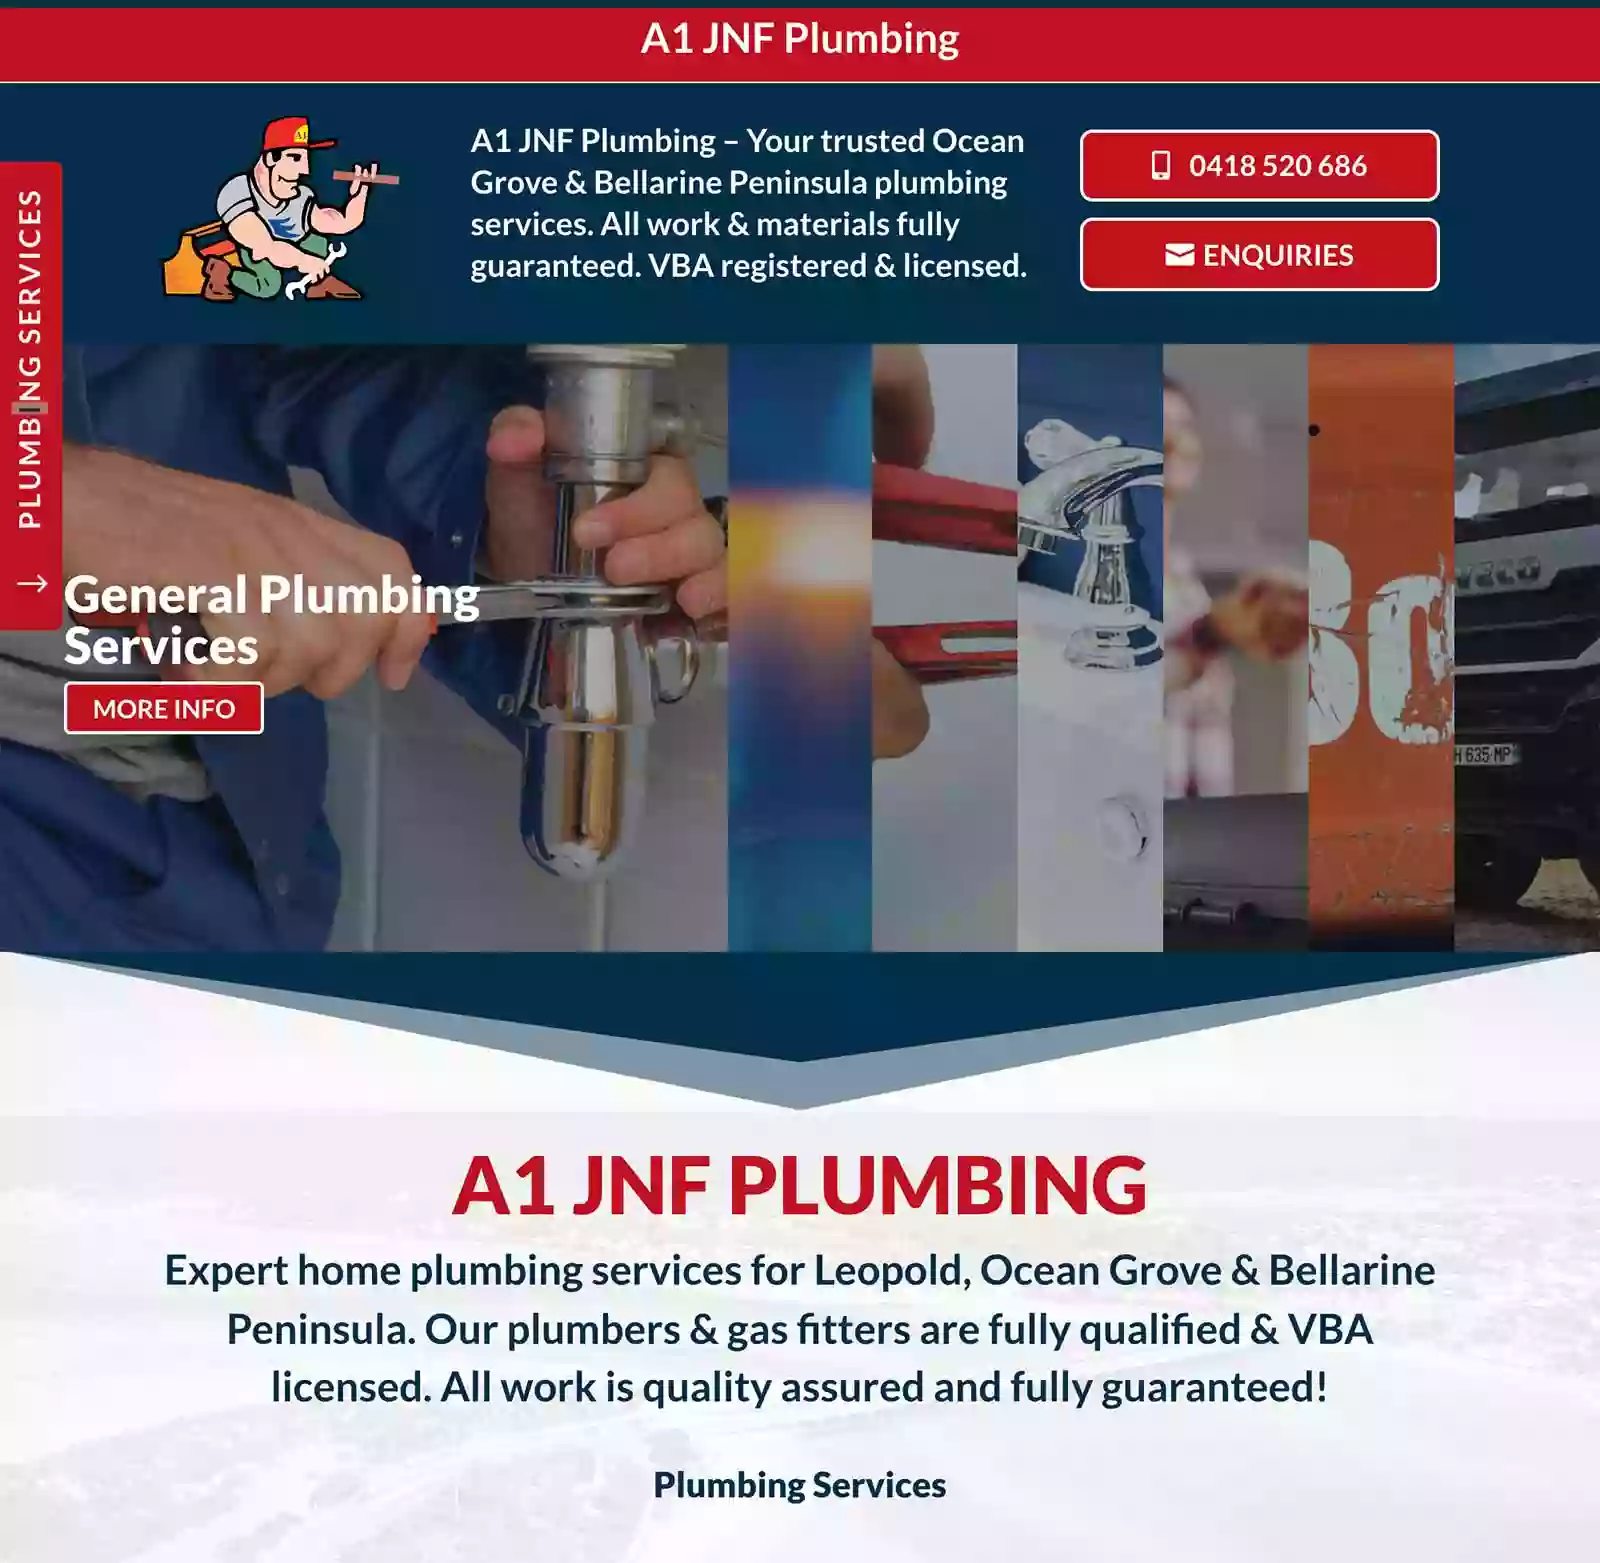 A1 JNF Plumbing